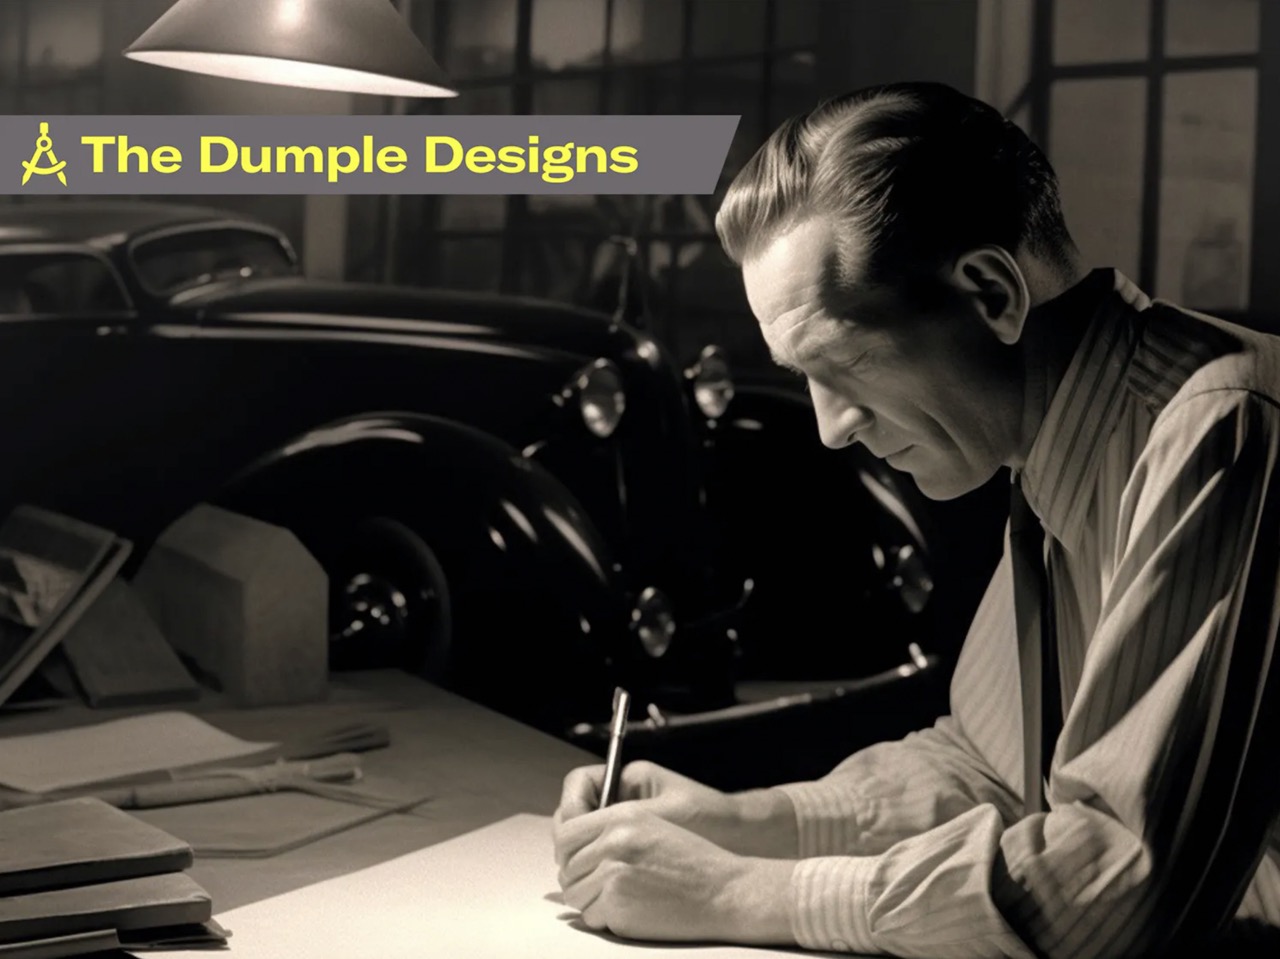 The Dumple Designs: An introduction